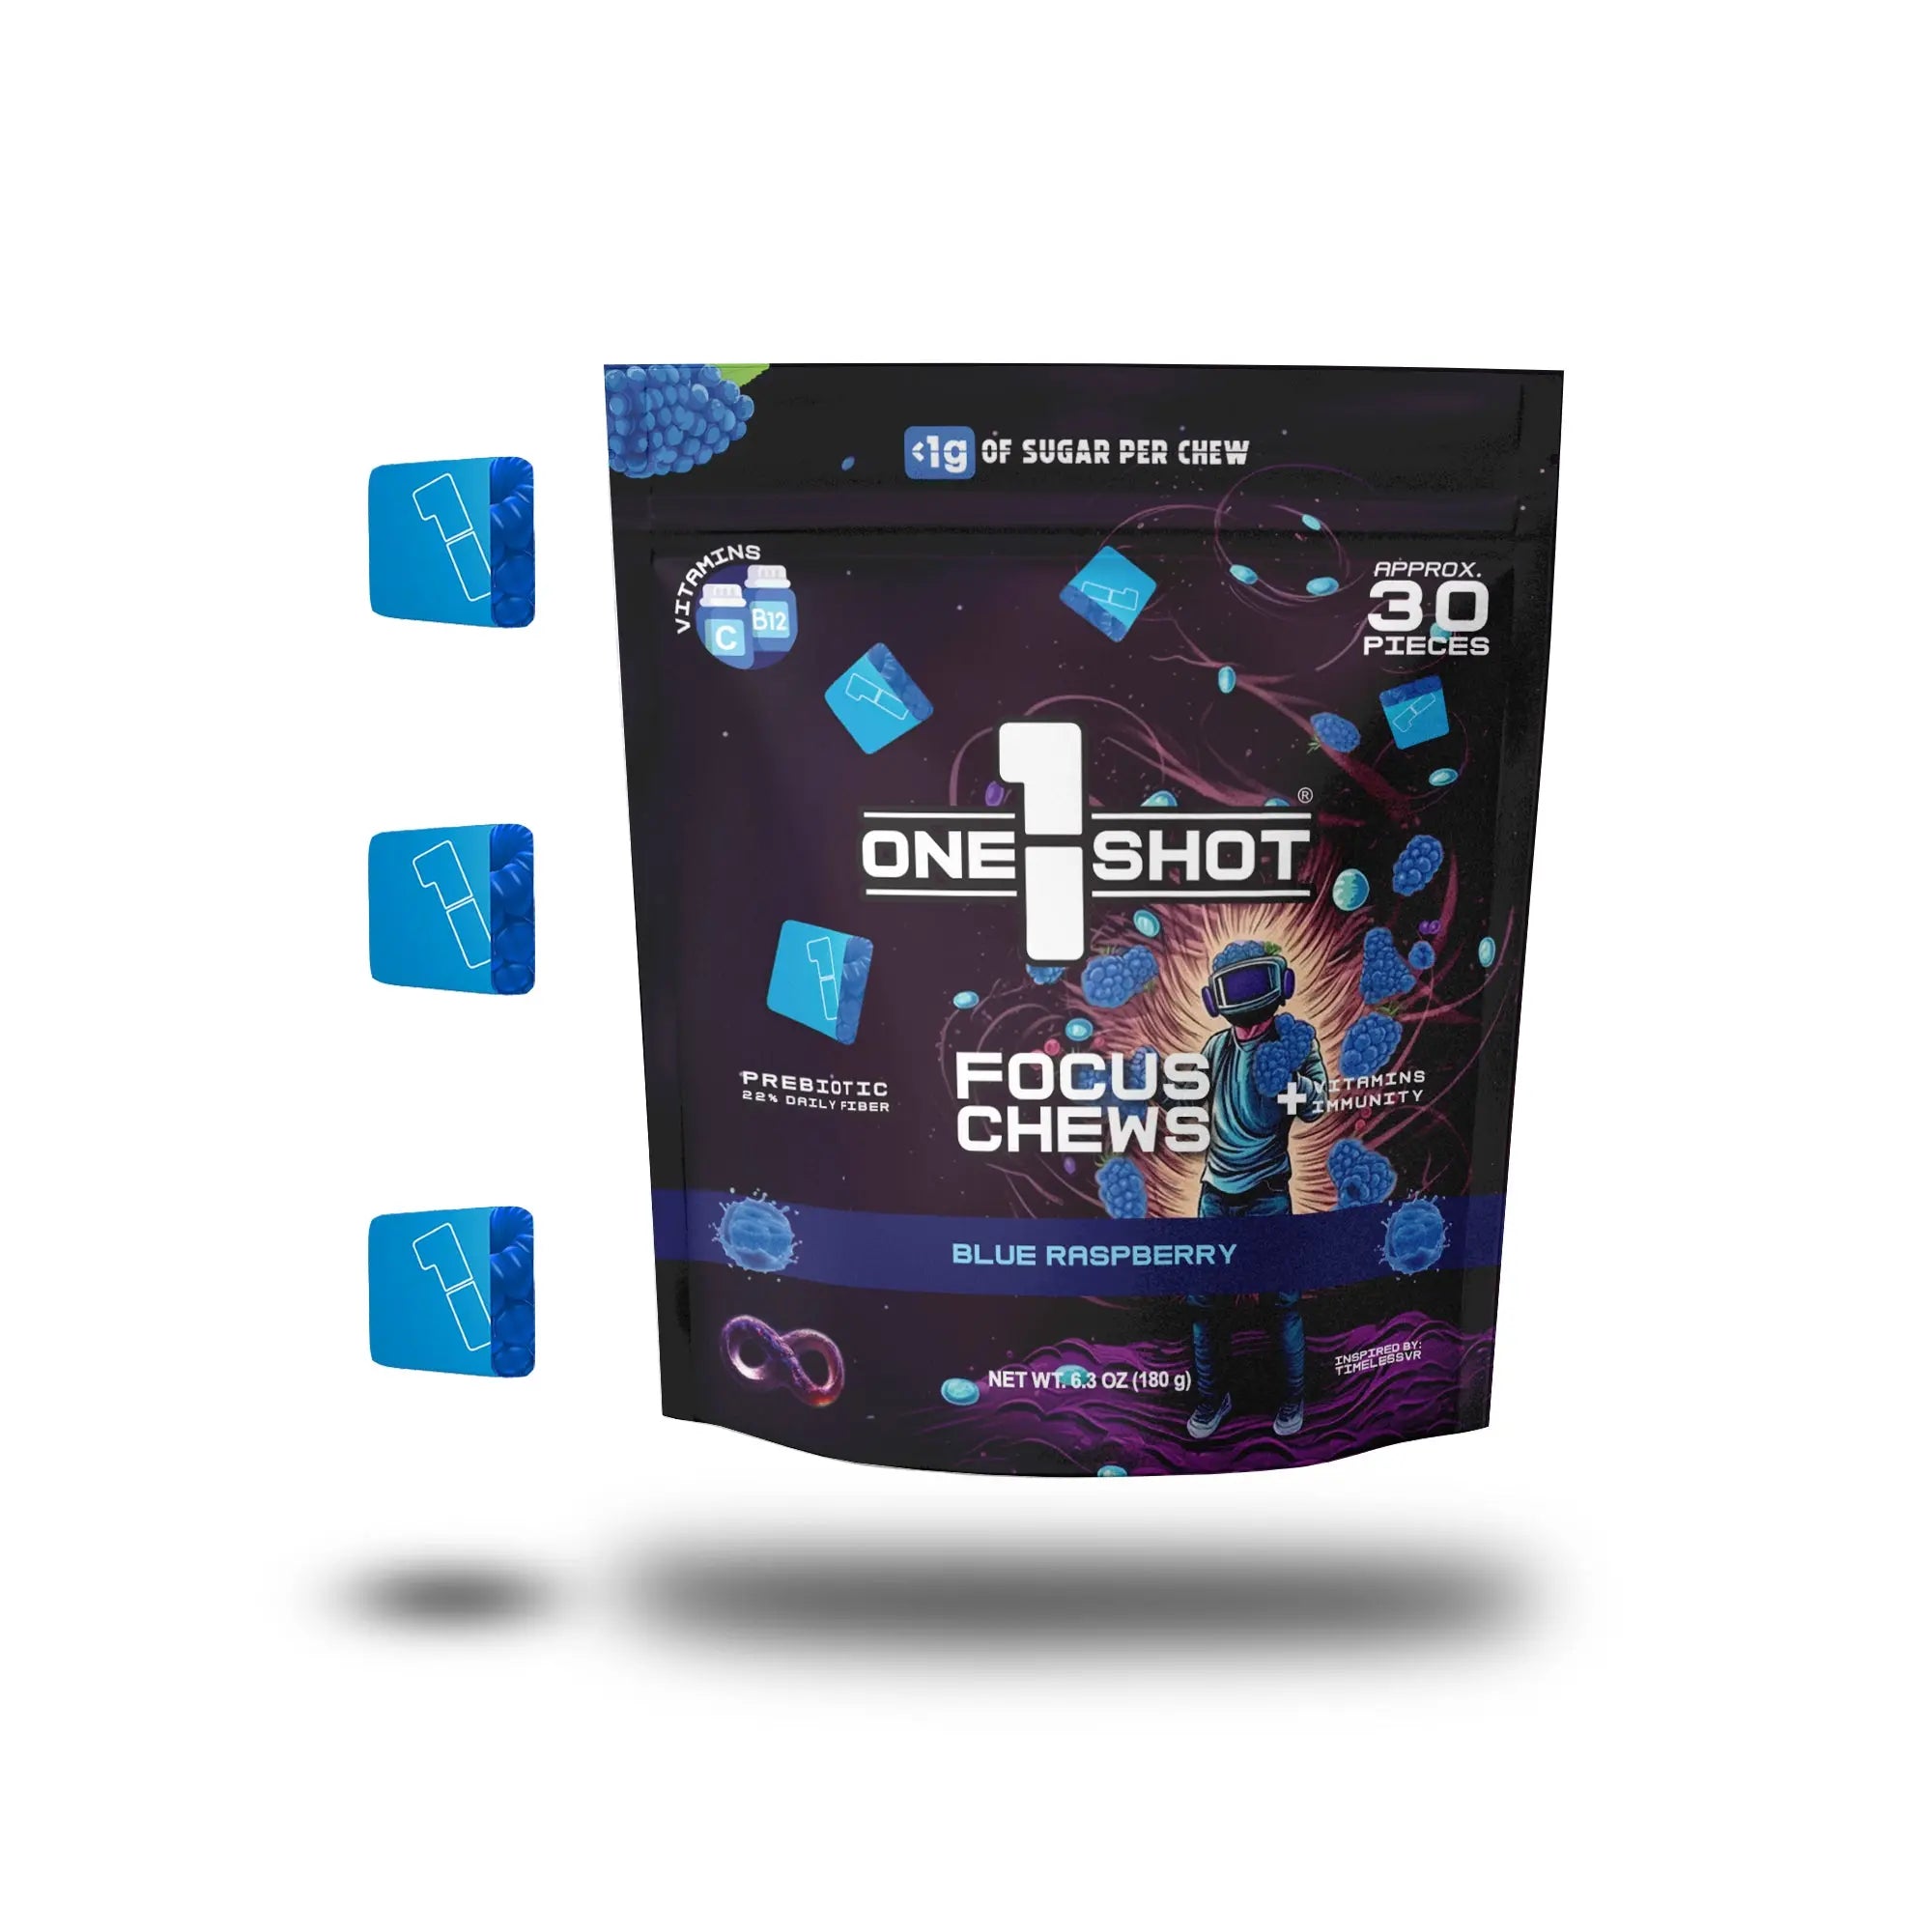 (Pre-Order) Blue Raspberry Focus Chews | Nootropics, Vitamins & Immunity (30 Pieces) 1 Shot Energy